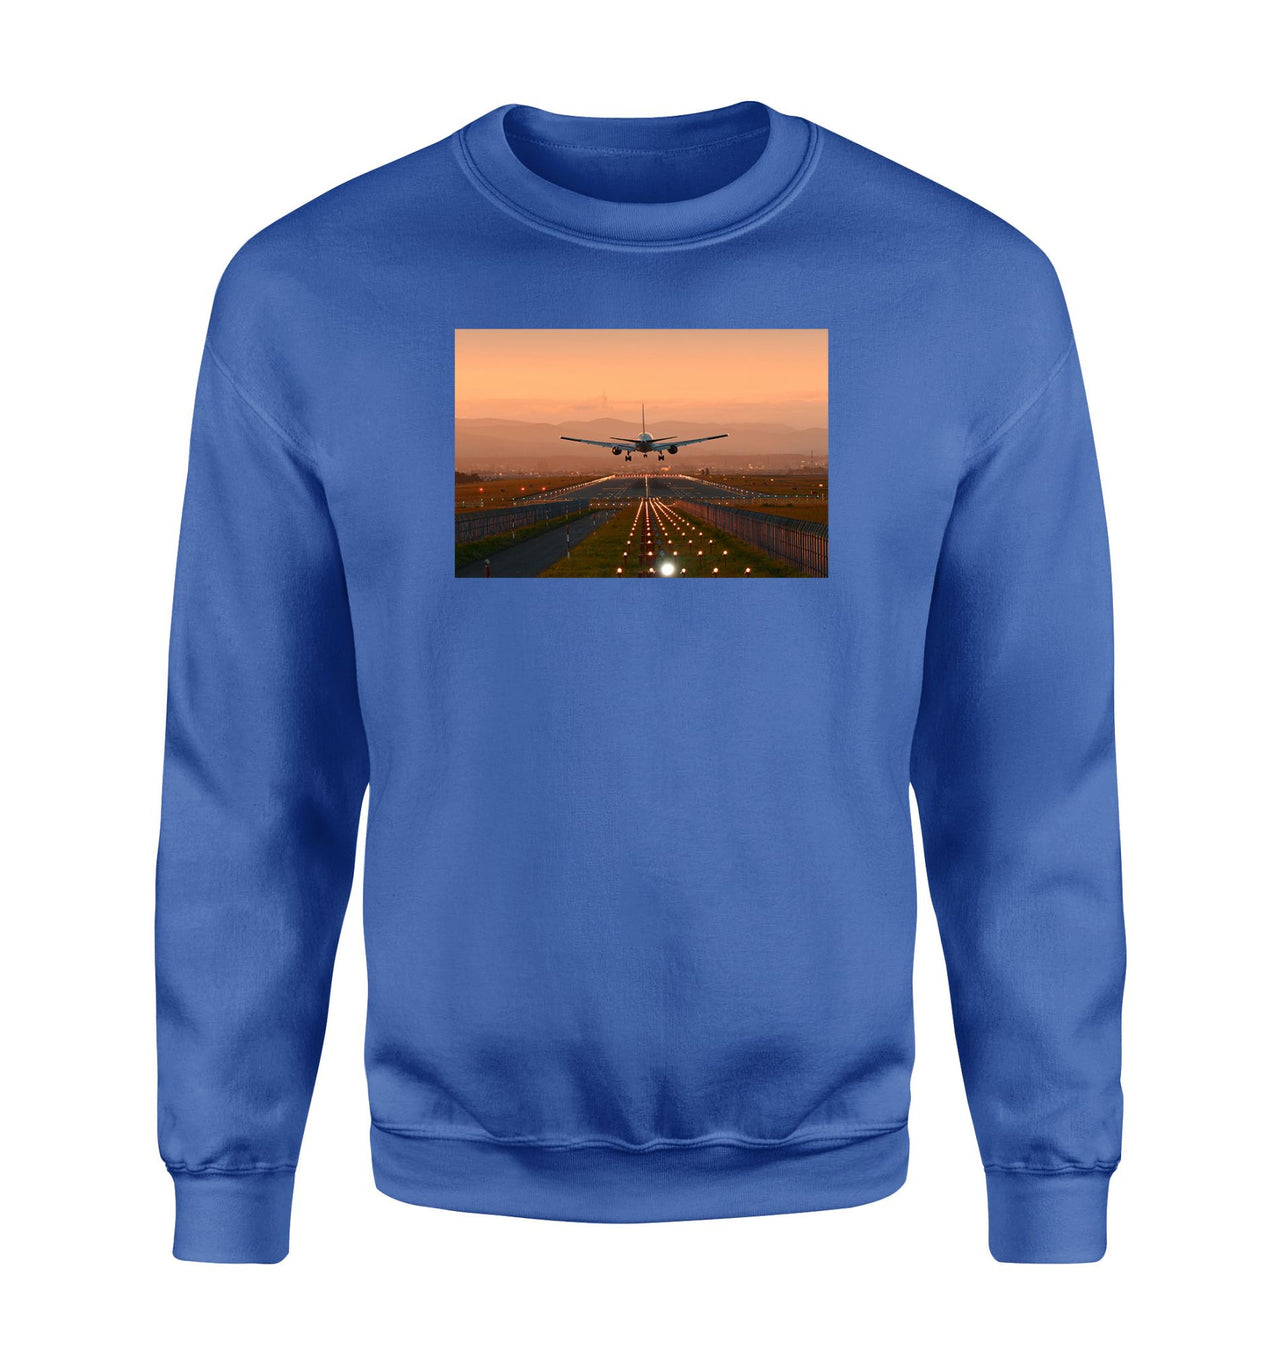 Super Cool Landing During Sunset Designed Sweatshirts